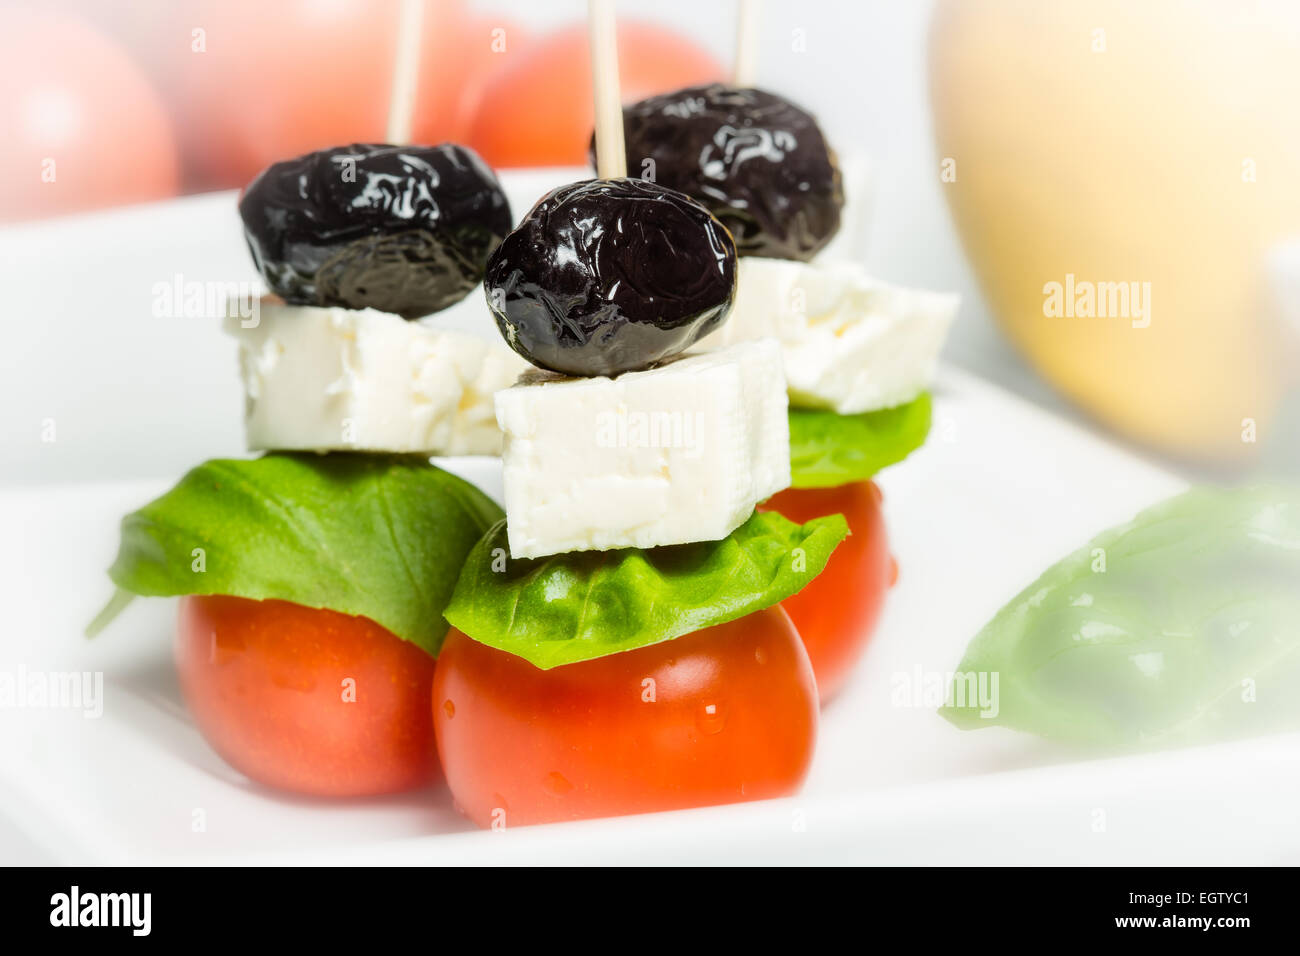 Italian style - tomato, cheese, olives and basil Stock Photo